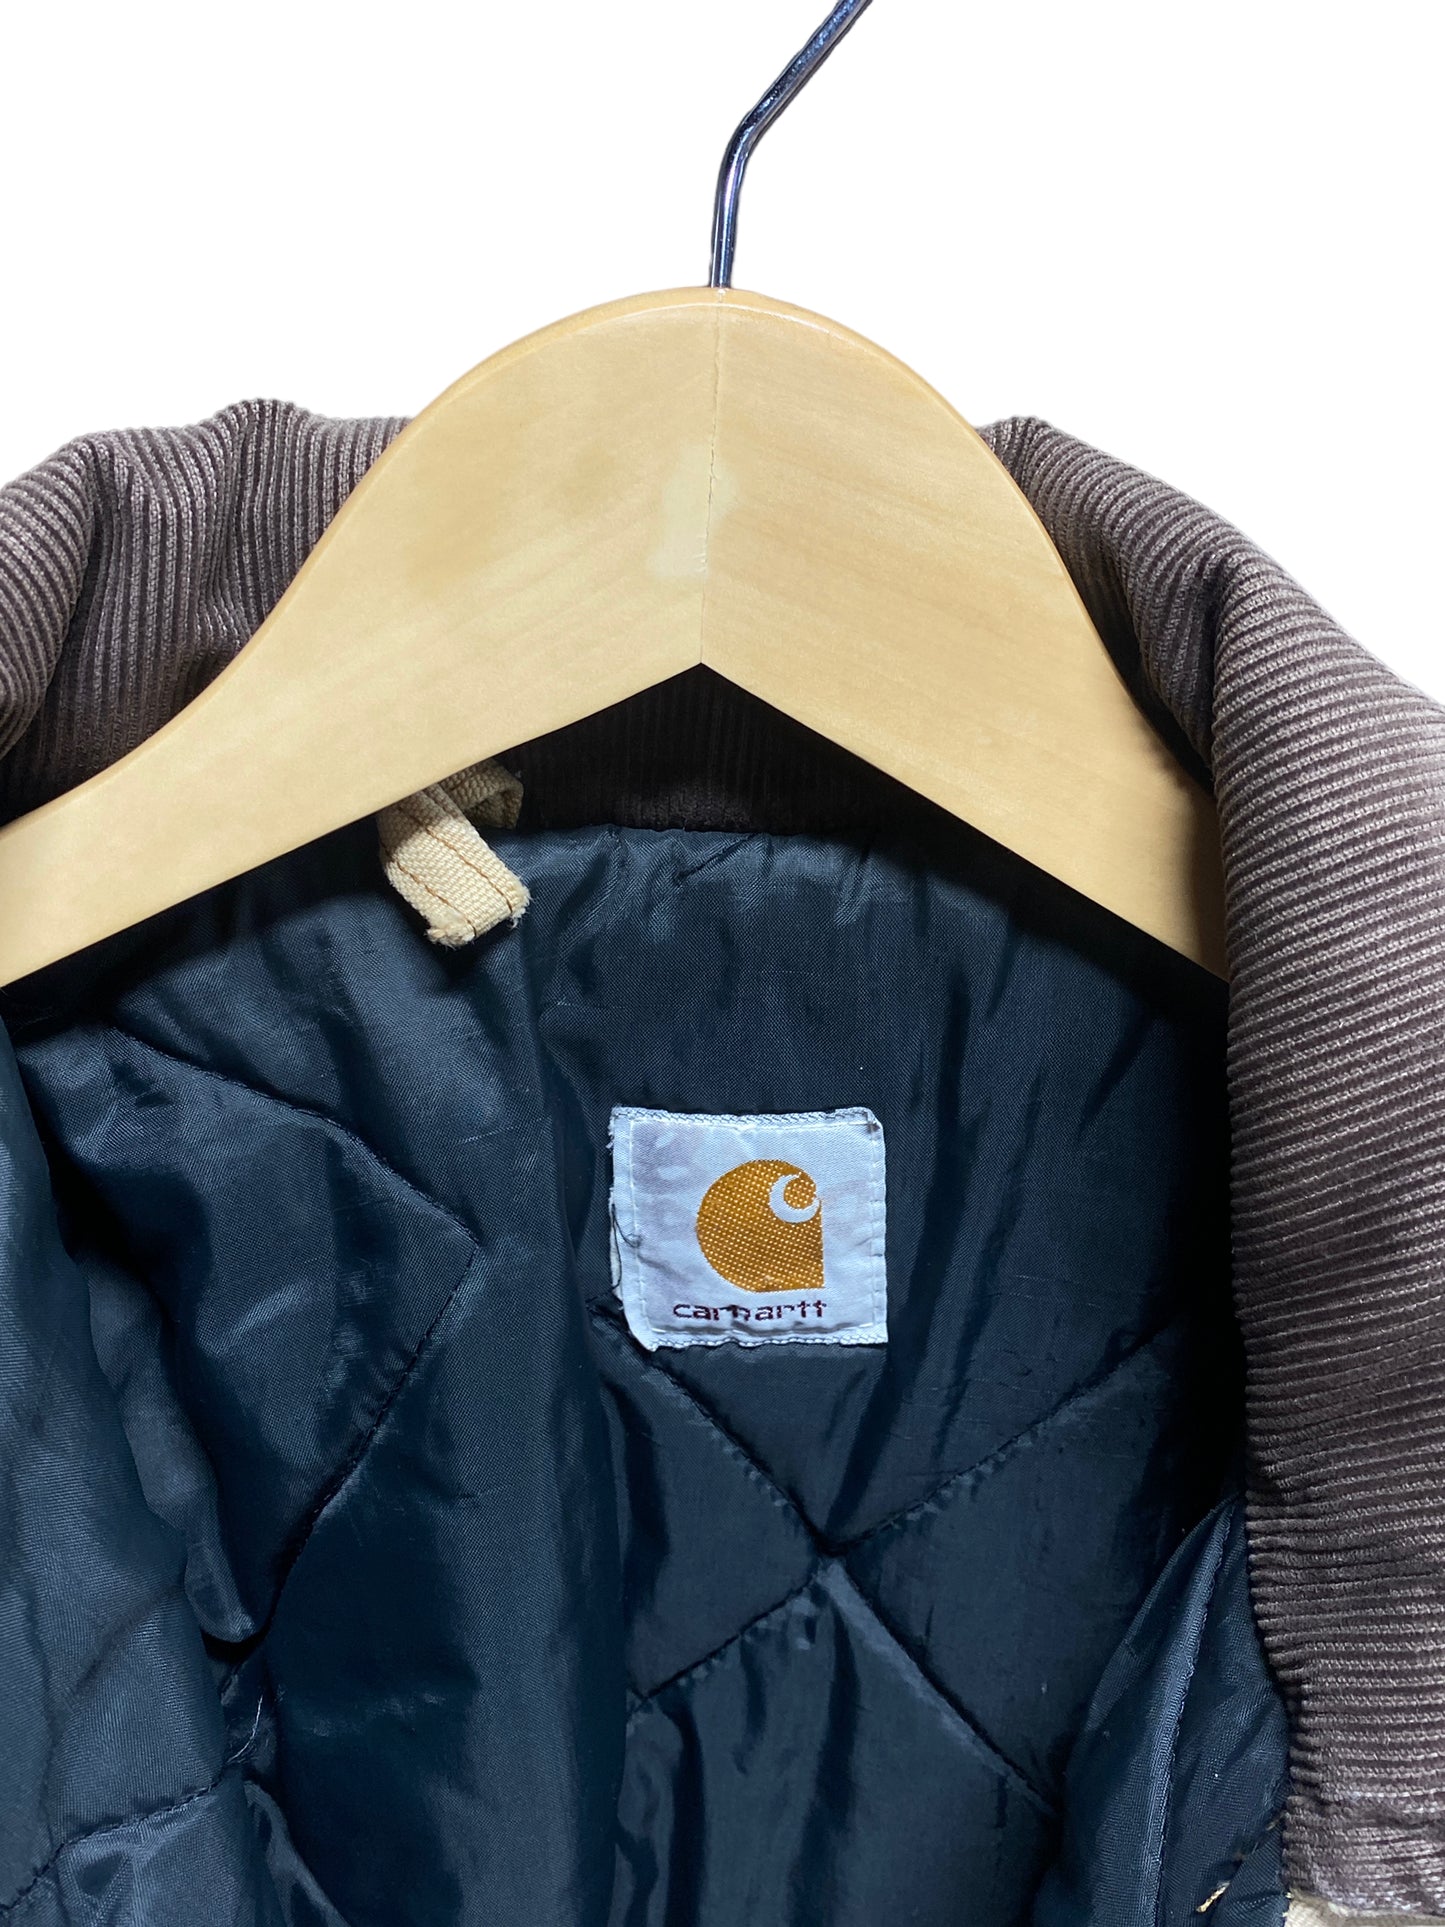 Vintage 90's Carhartt Distressed Beige Zip Up Chore Jacket Size L/XL